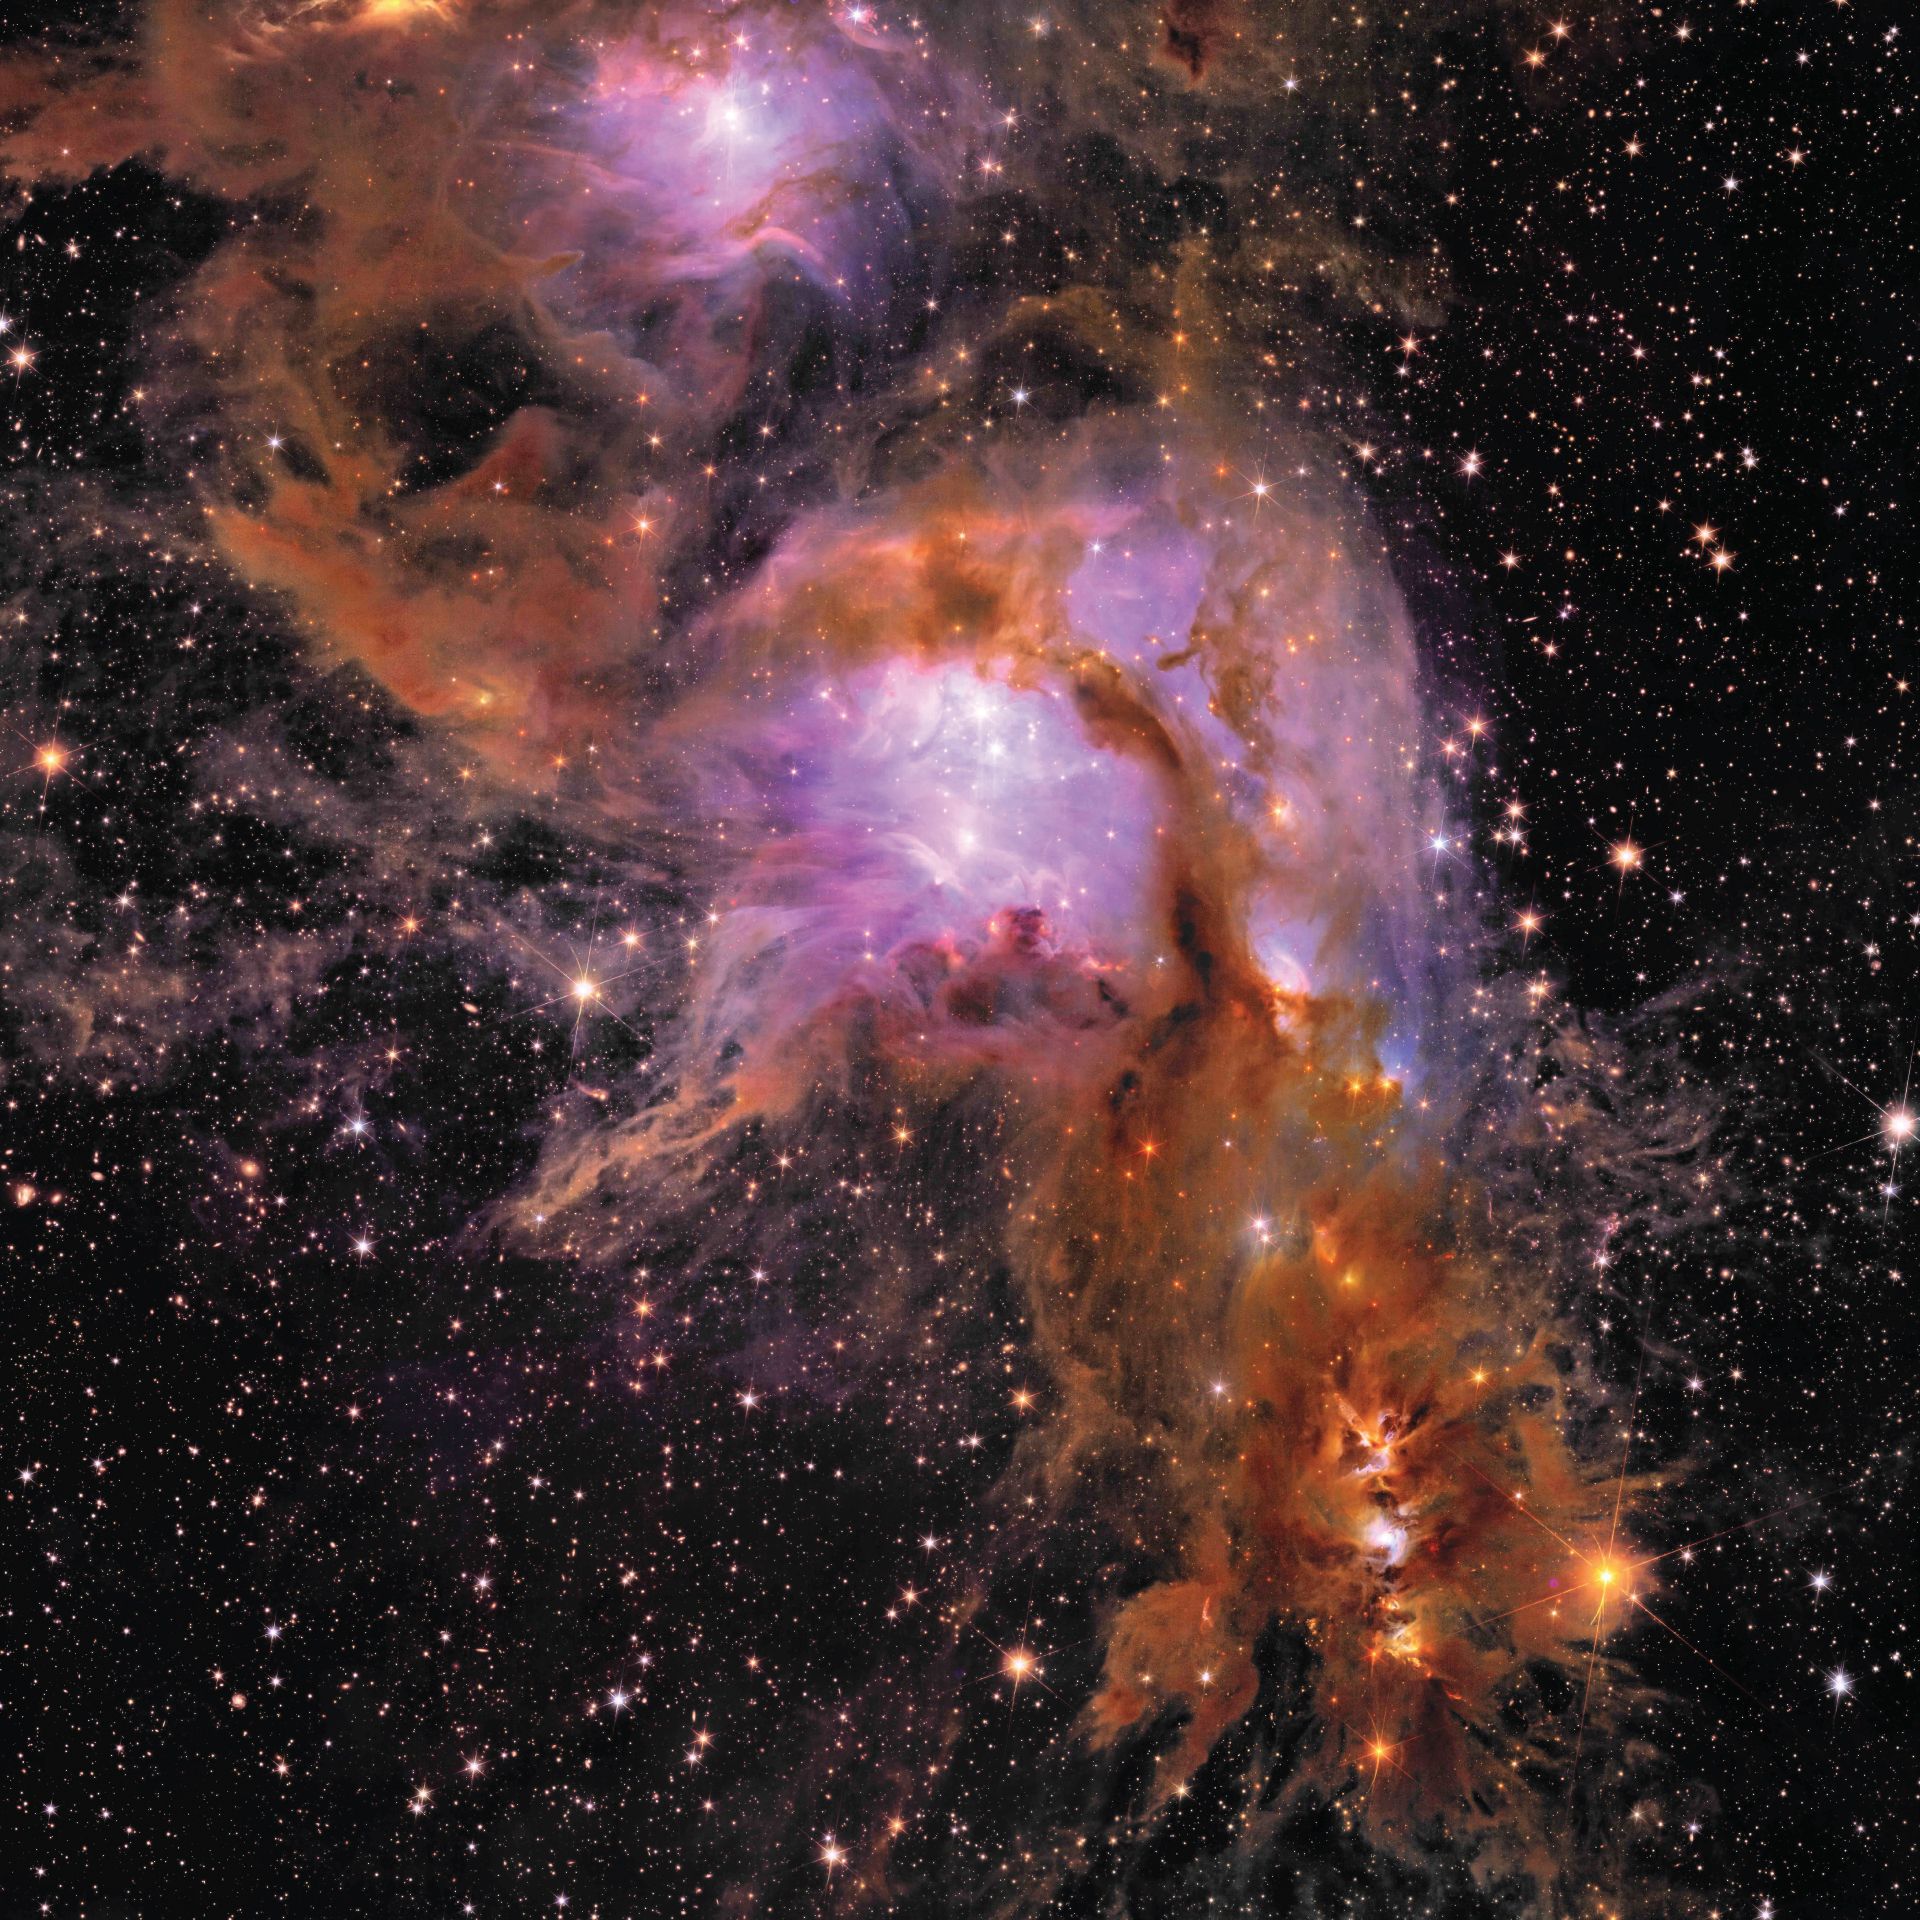 Messier 78 is a star nursery enveloped in interstellar dust